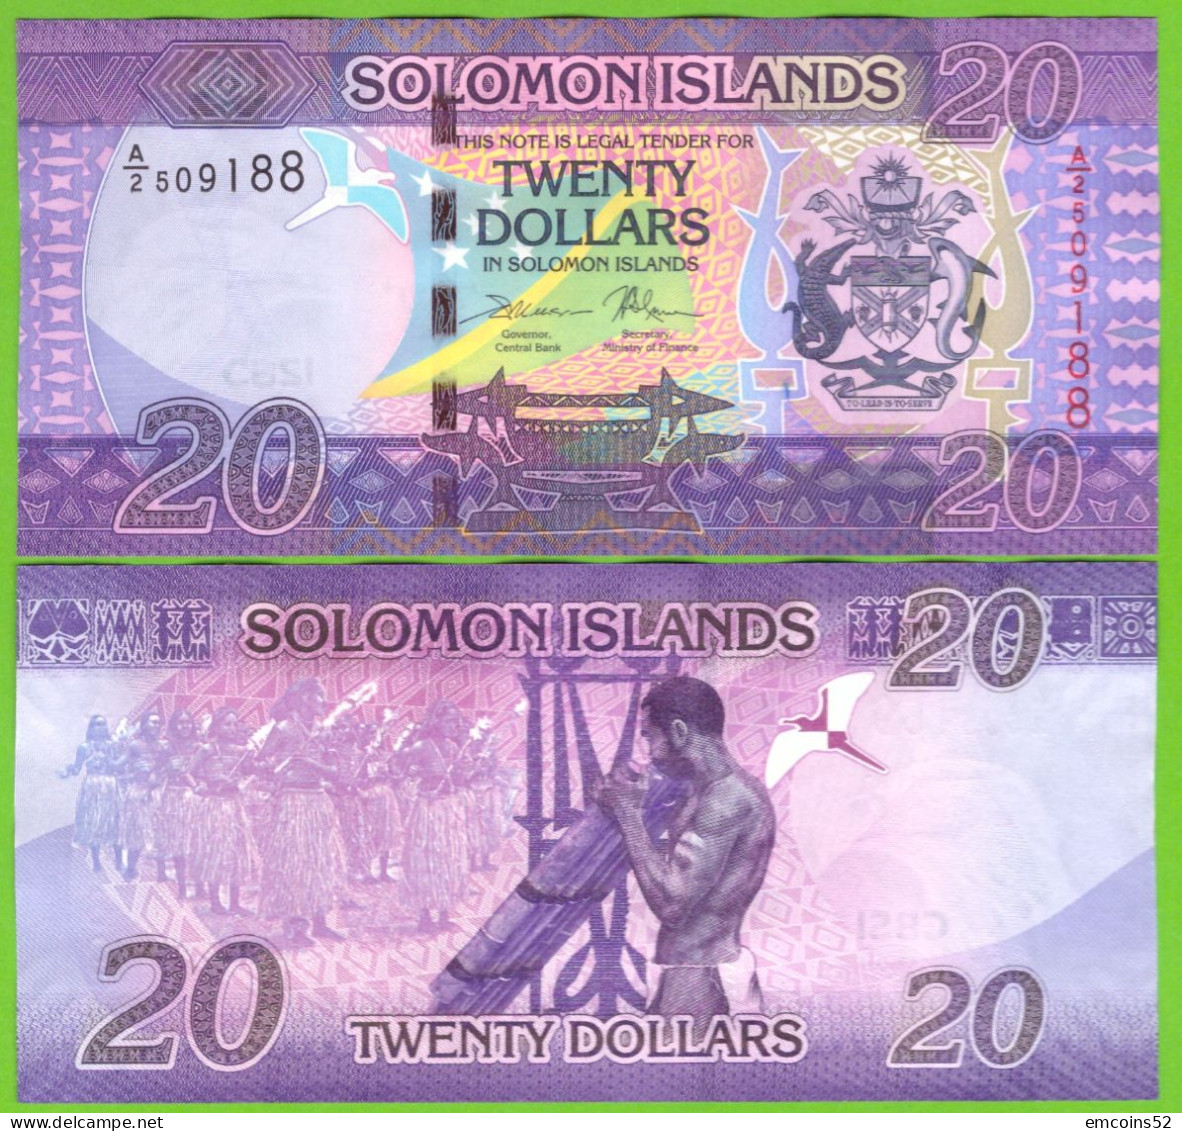 SOLOMON ISLANDS 20 DOLLARS 2017  P-34(1)  UNC - Solomon Islands